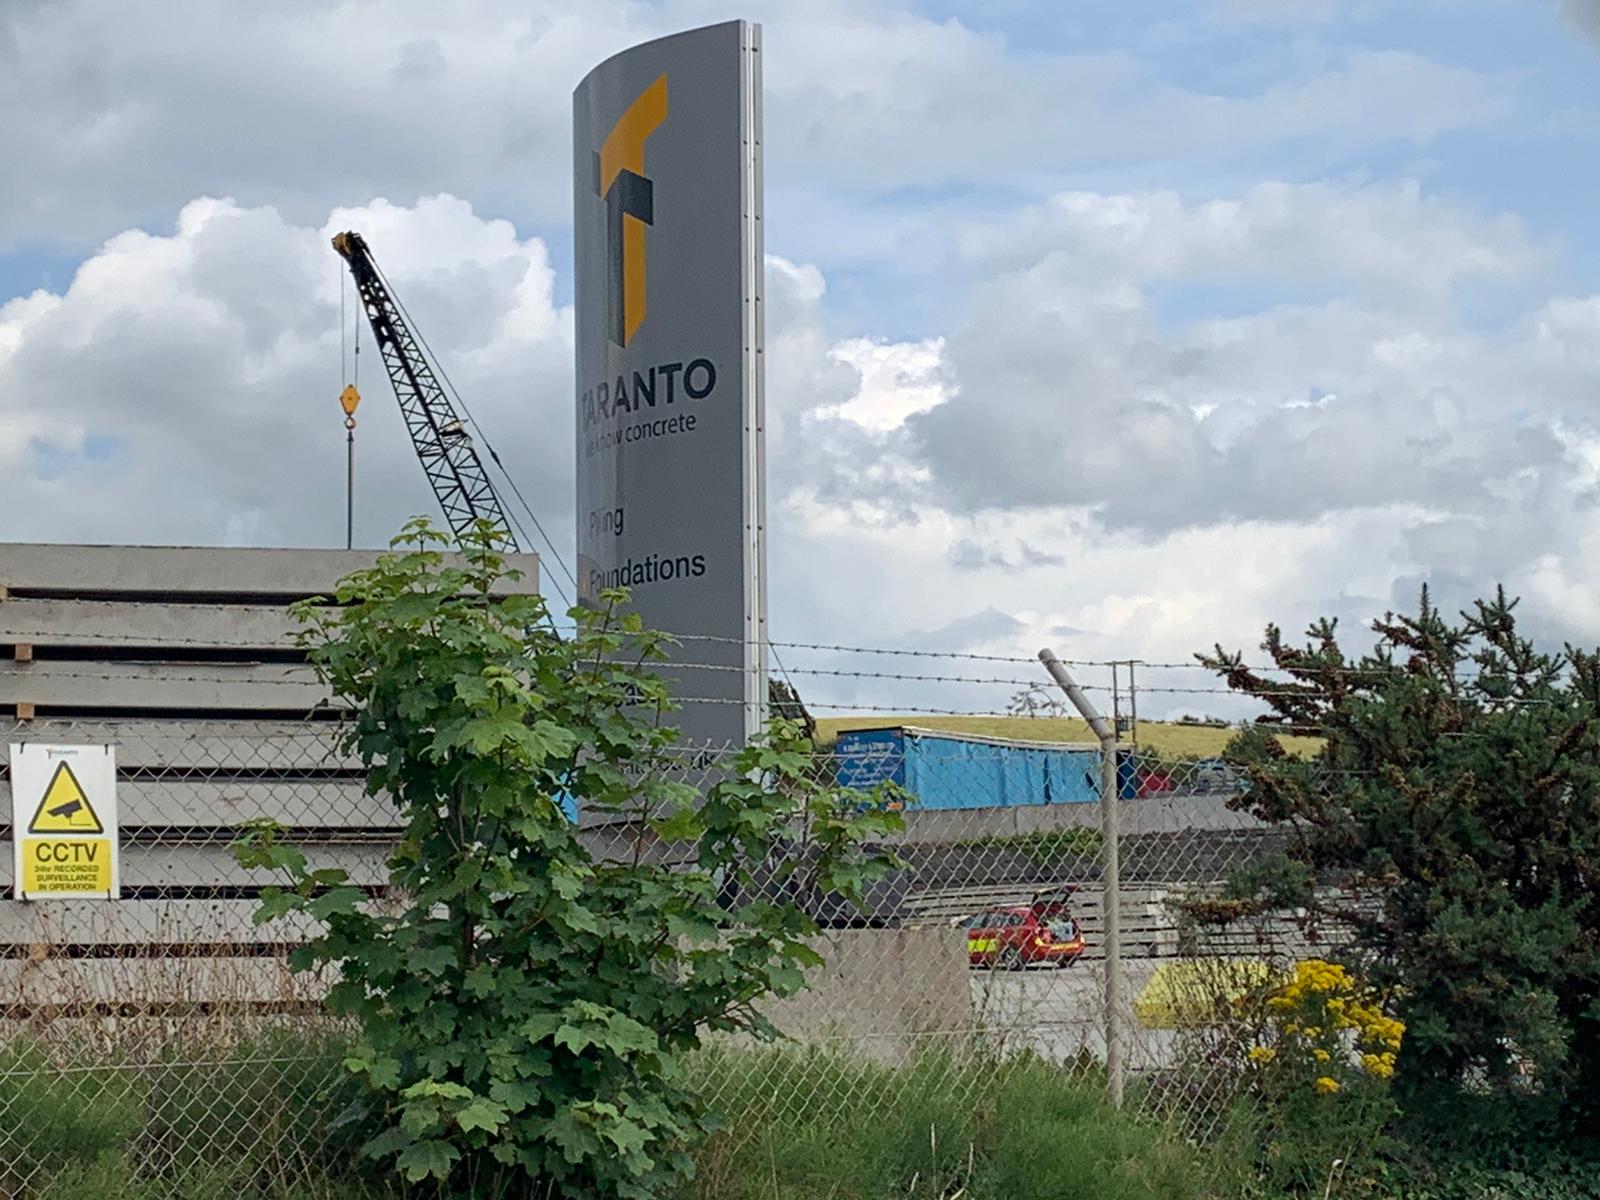 Taranto concrete factory in Tandragee